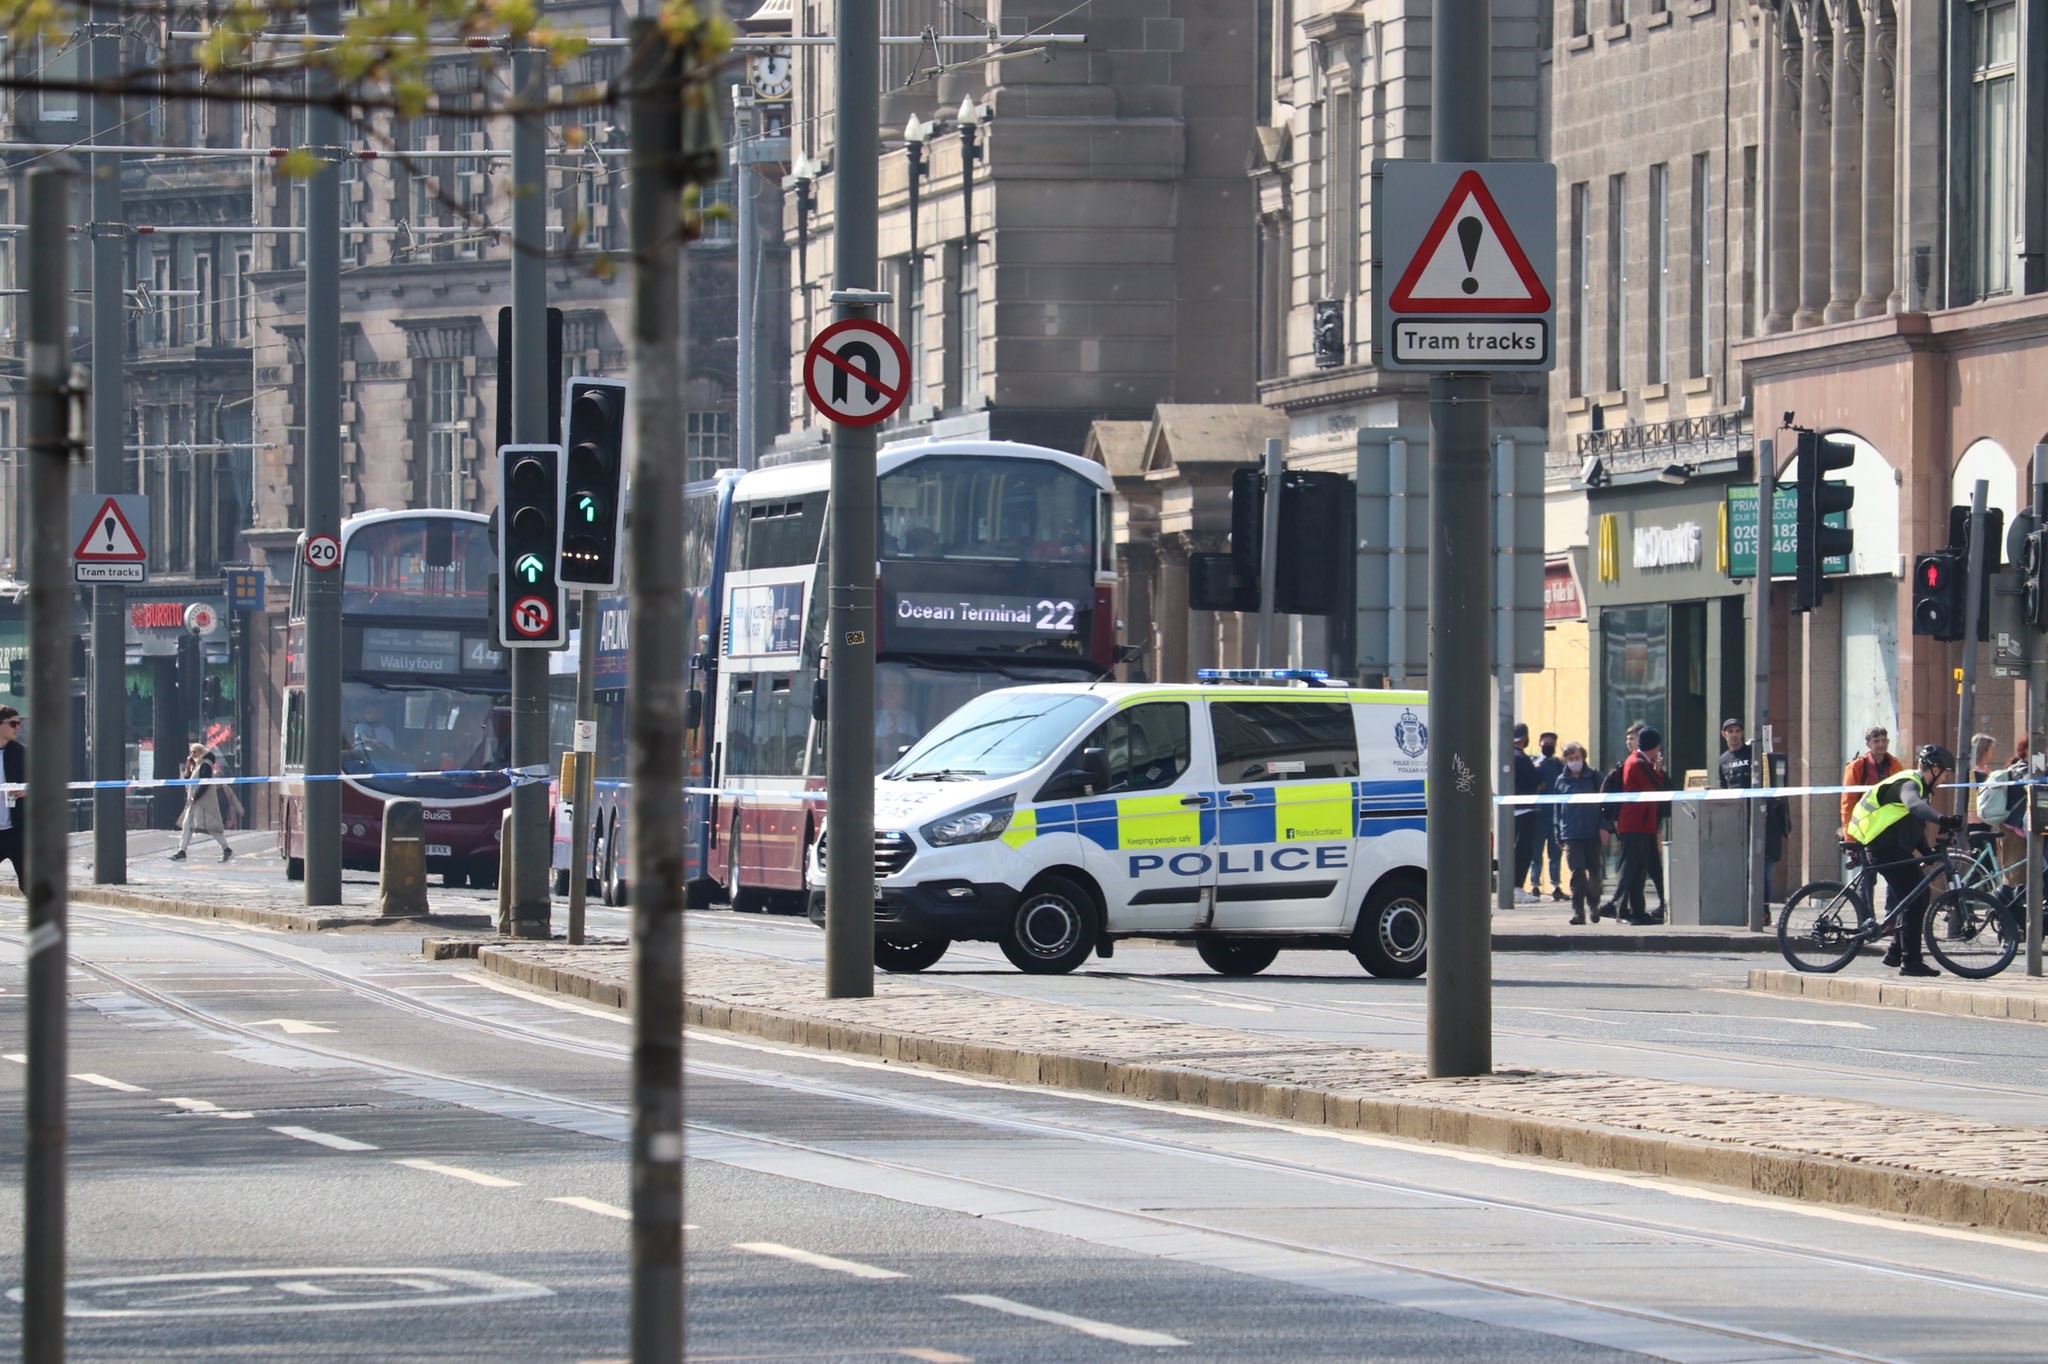 Edinburgh: Police have closed the street. (Matt Donlan)